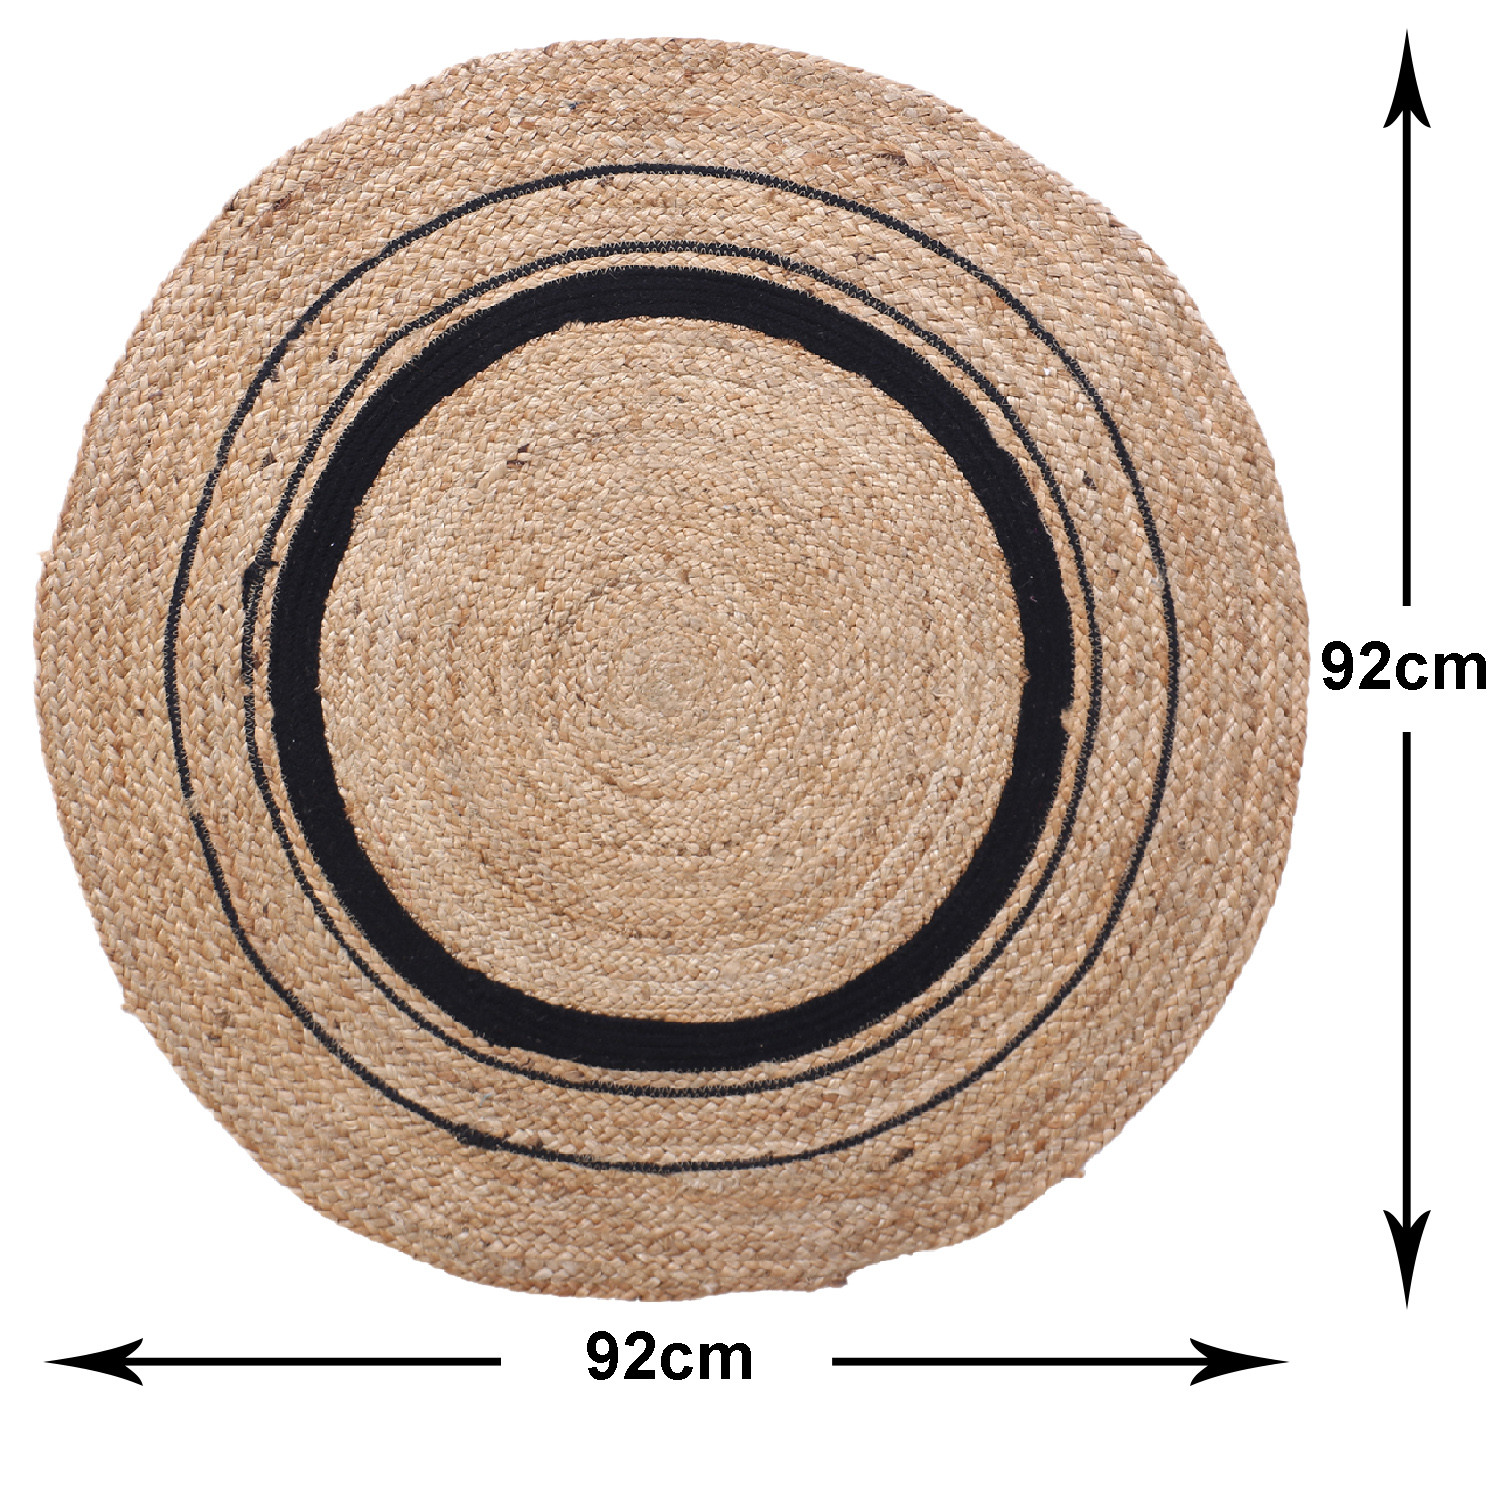 Kuber Industries Handmade Carpet|Cotton Circular Shape Black Layer Door Mat|Jute Area Rugs For Meditation,Living Room,Dining Room & Home Décor,92x92 cm,(Brown)